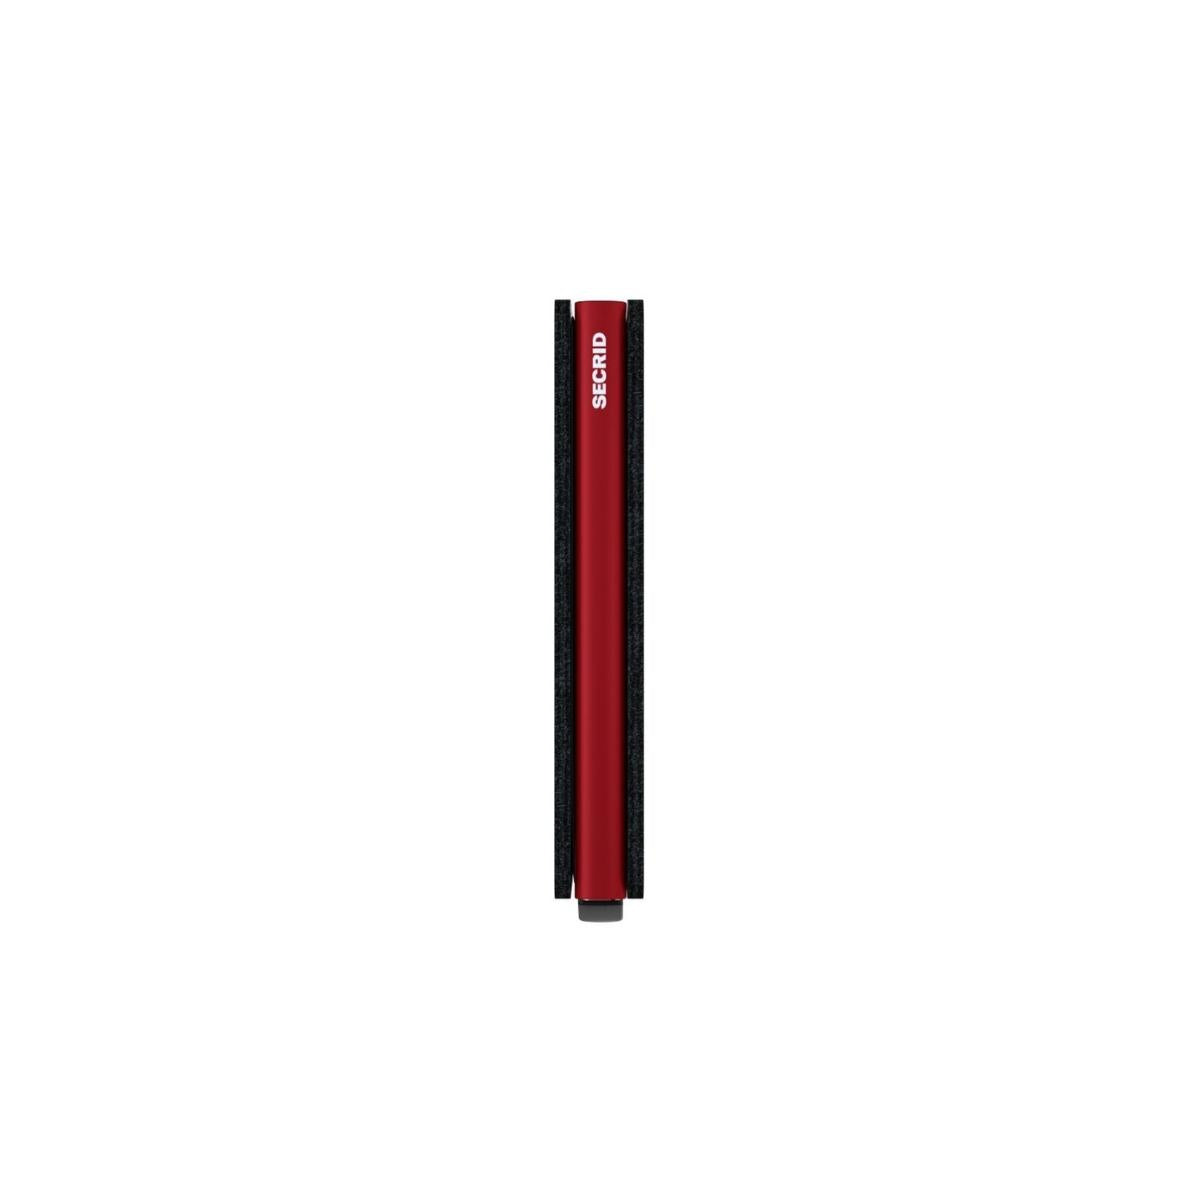 Secrid Slim Wallet Matte in Black/Red